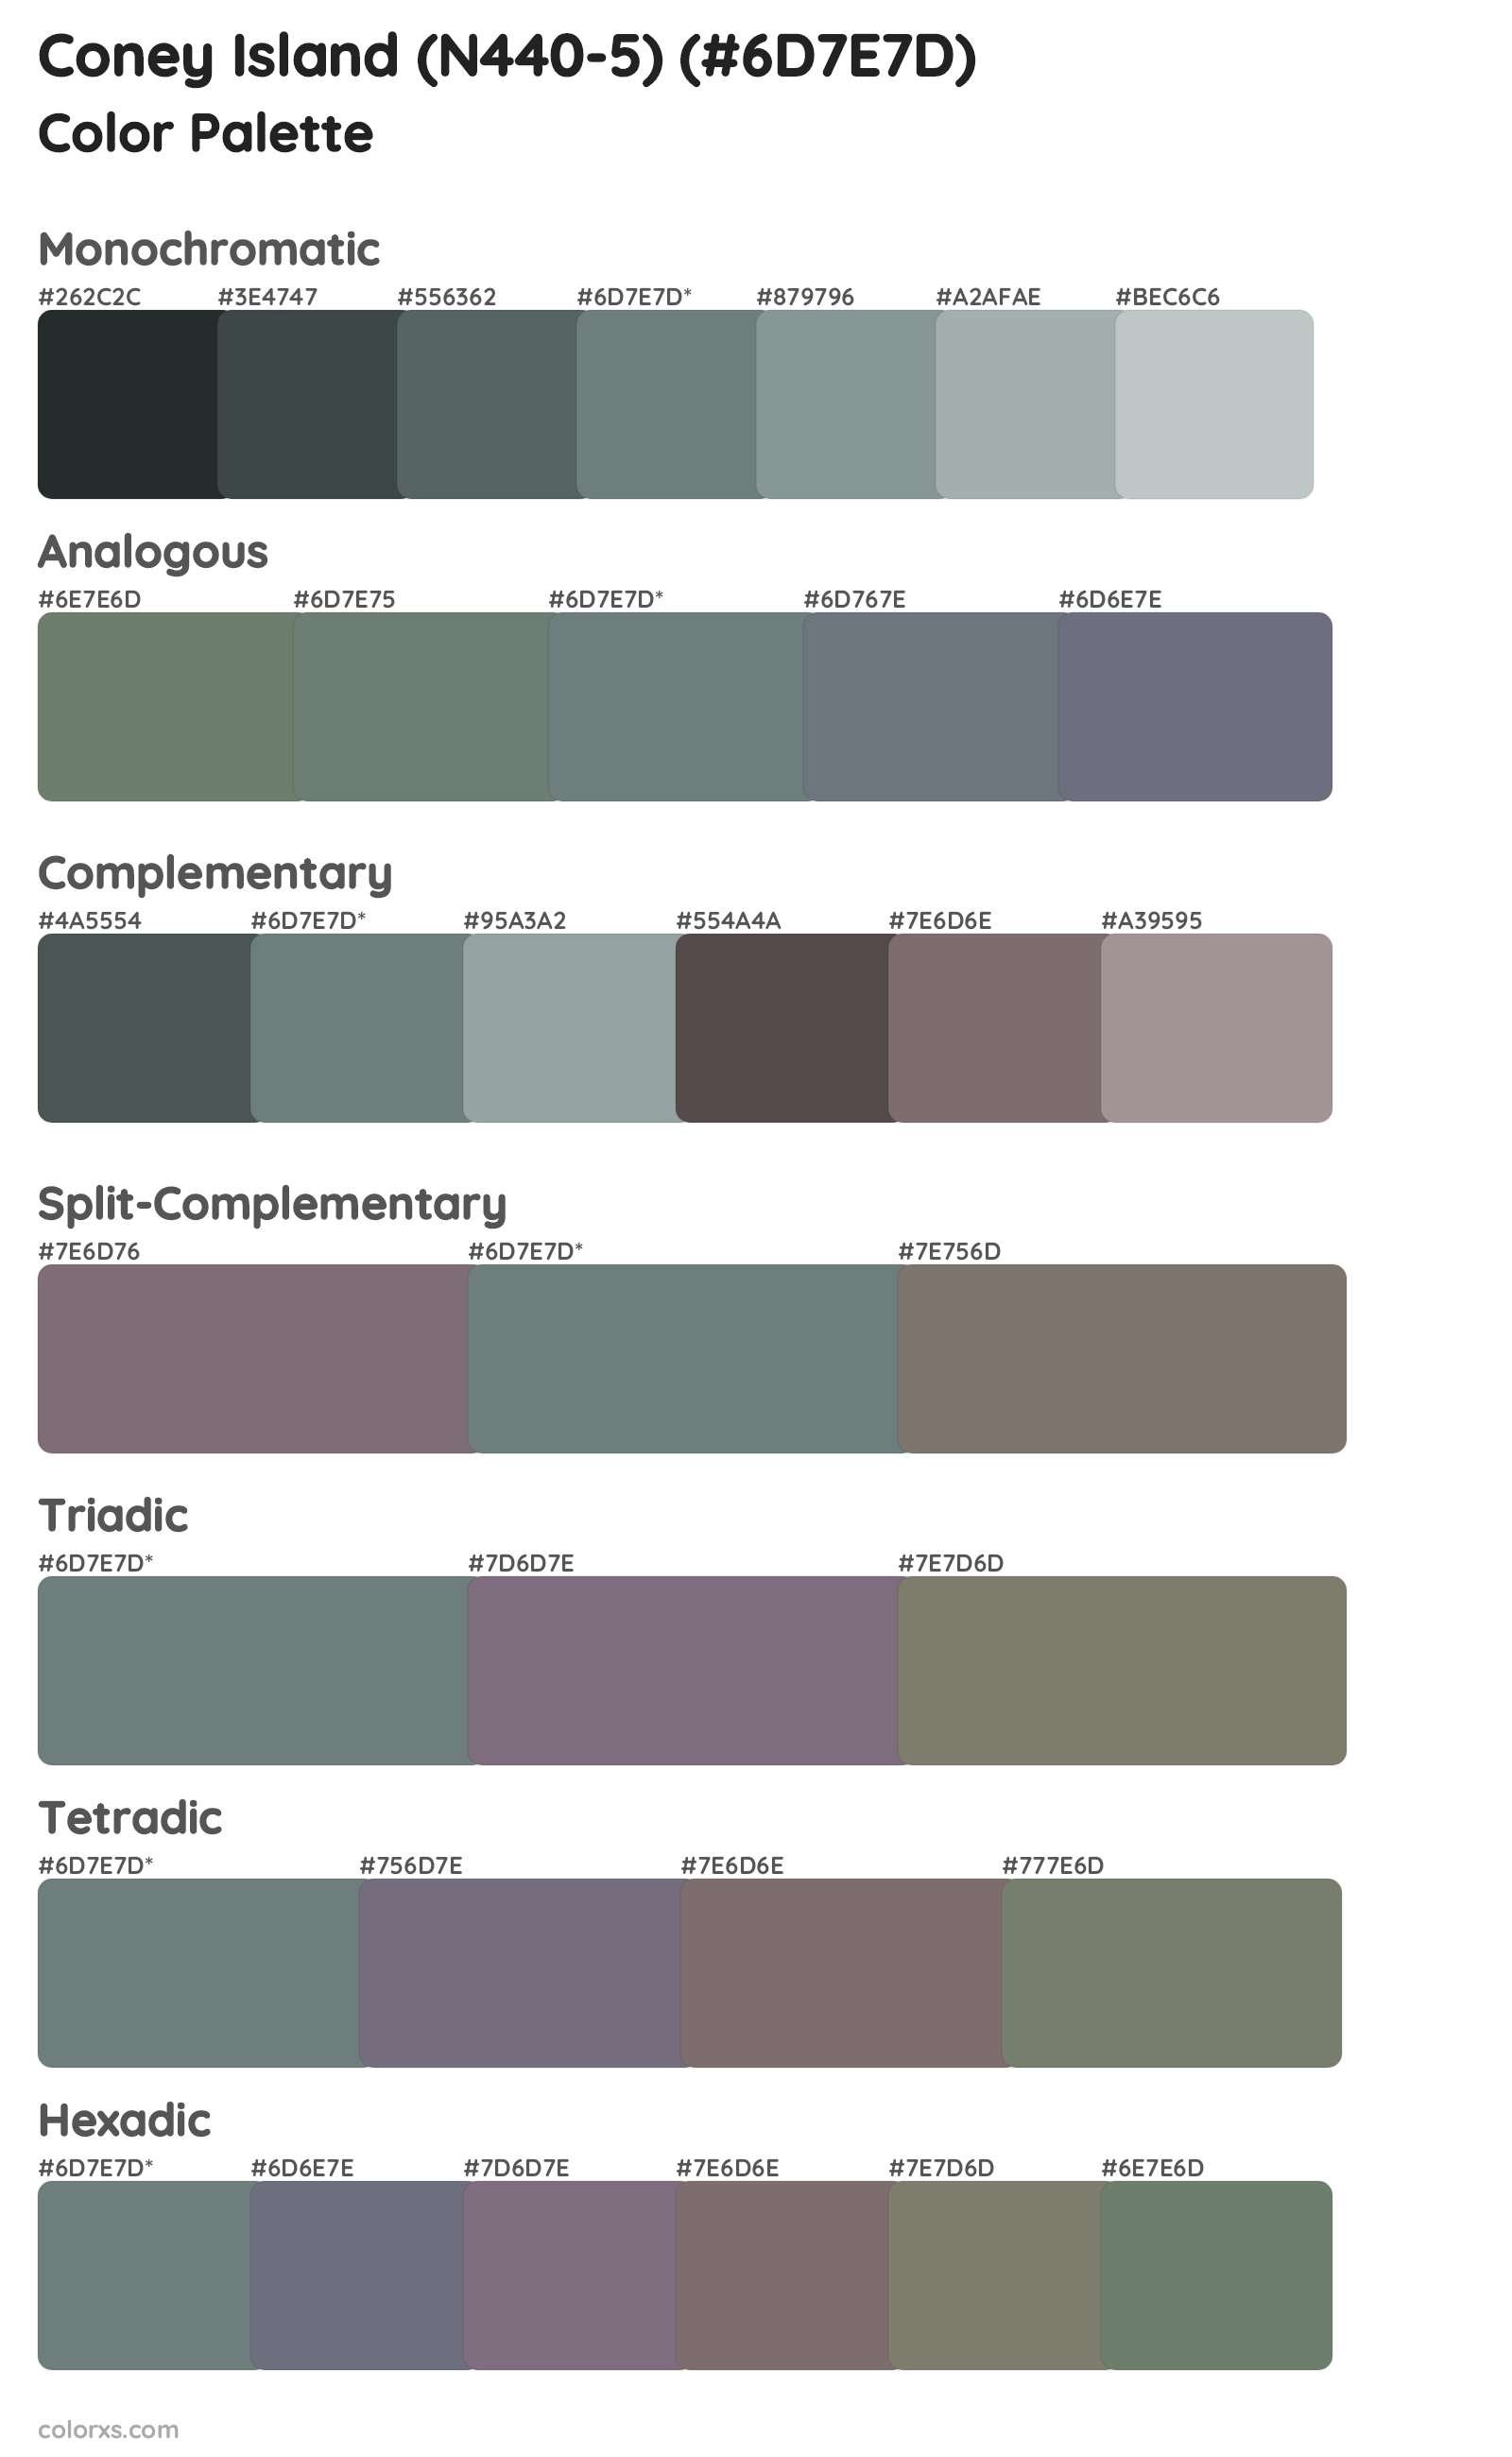 Coney Island (N440-5) Color Scheme Palettes